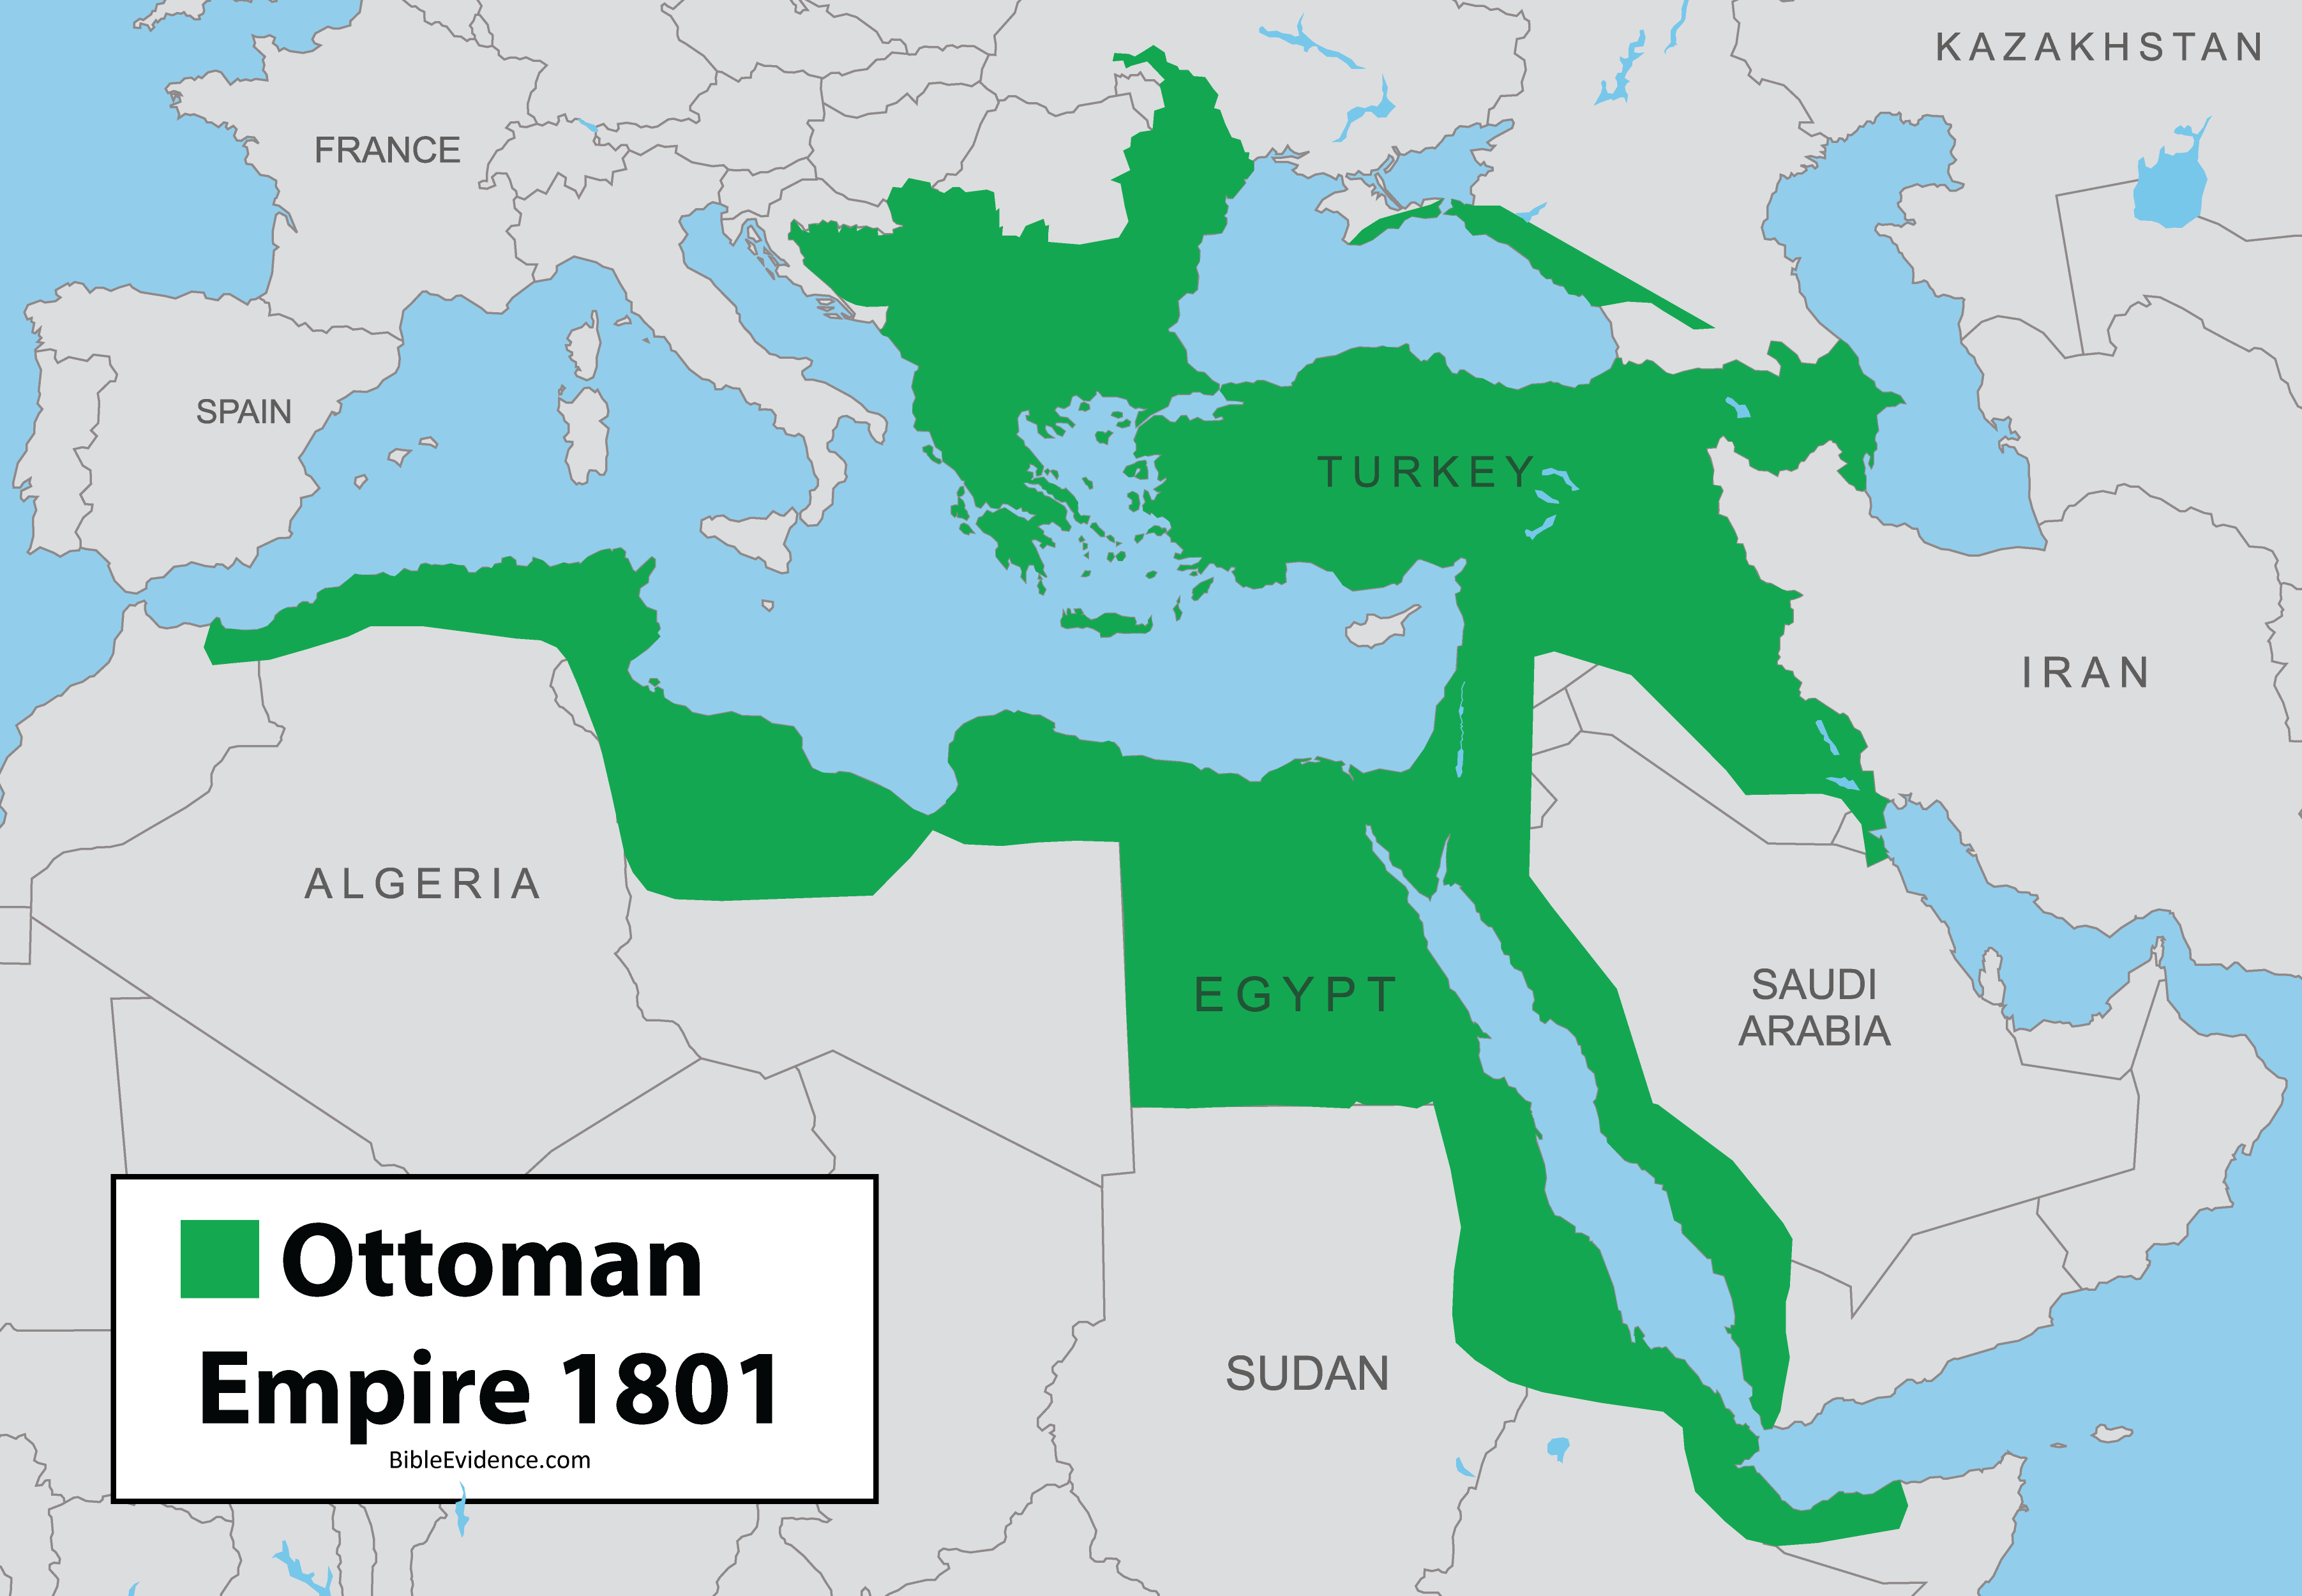 Ottoman Empire 1801